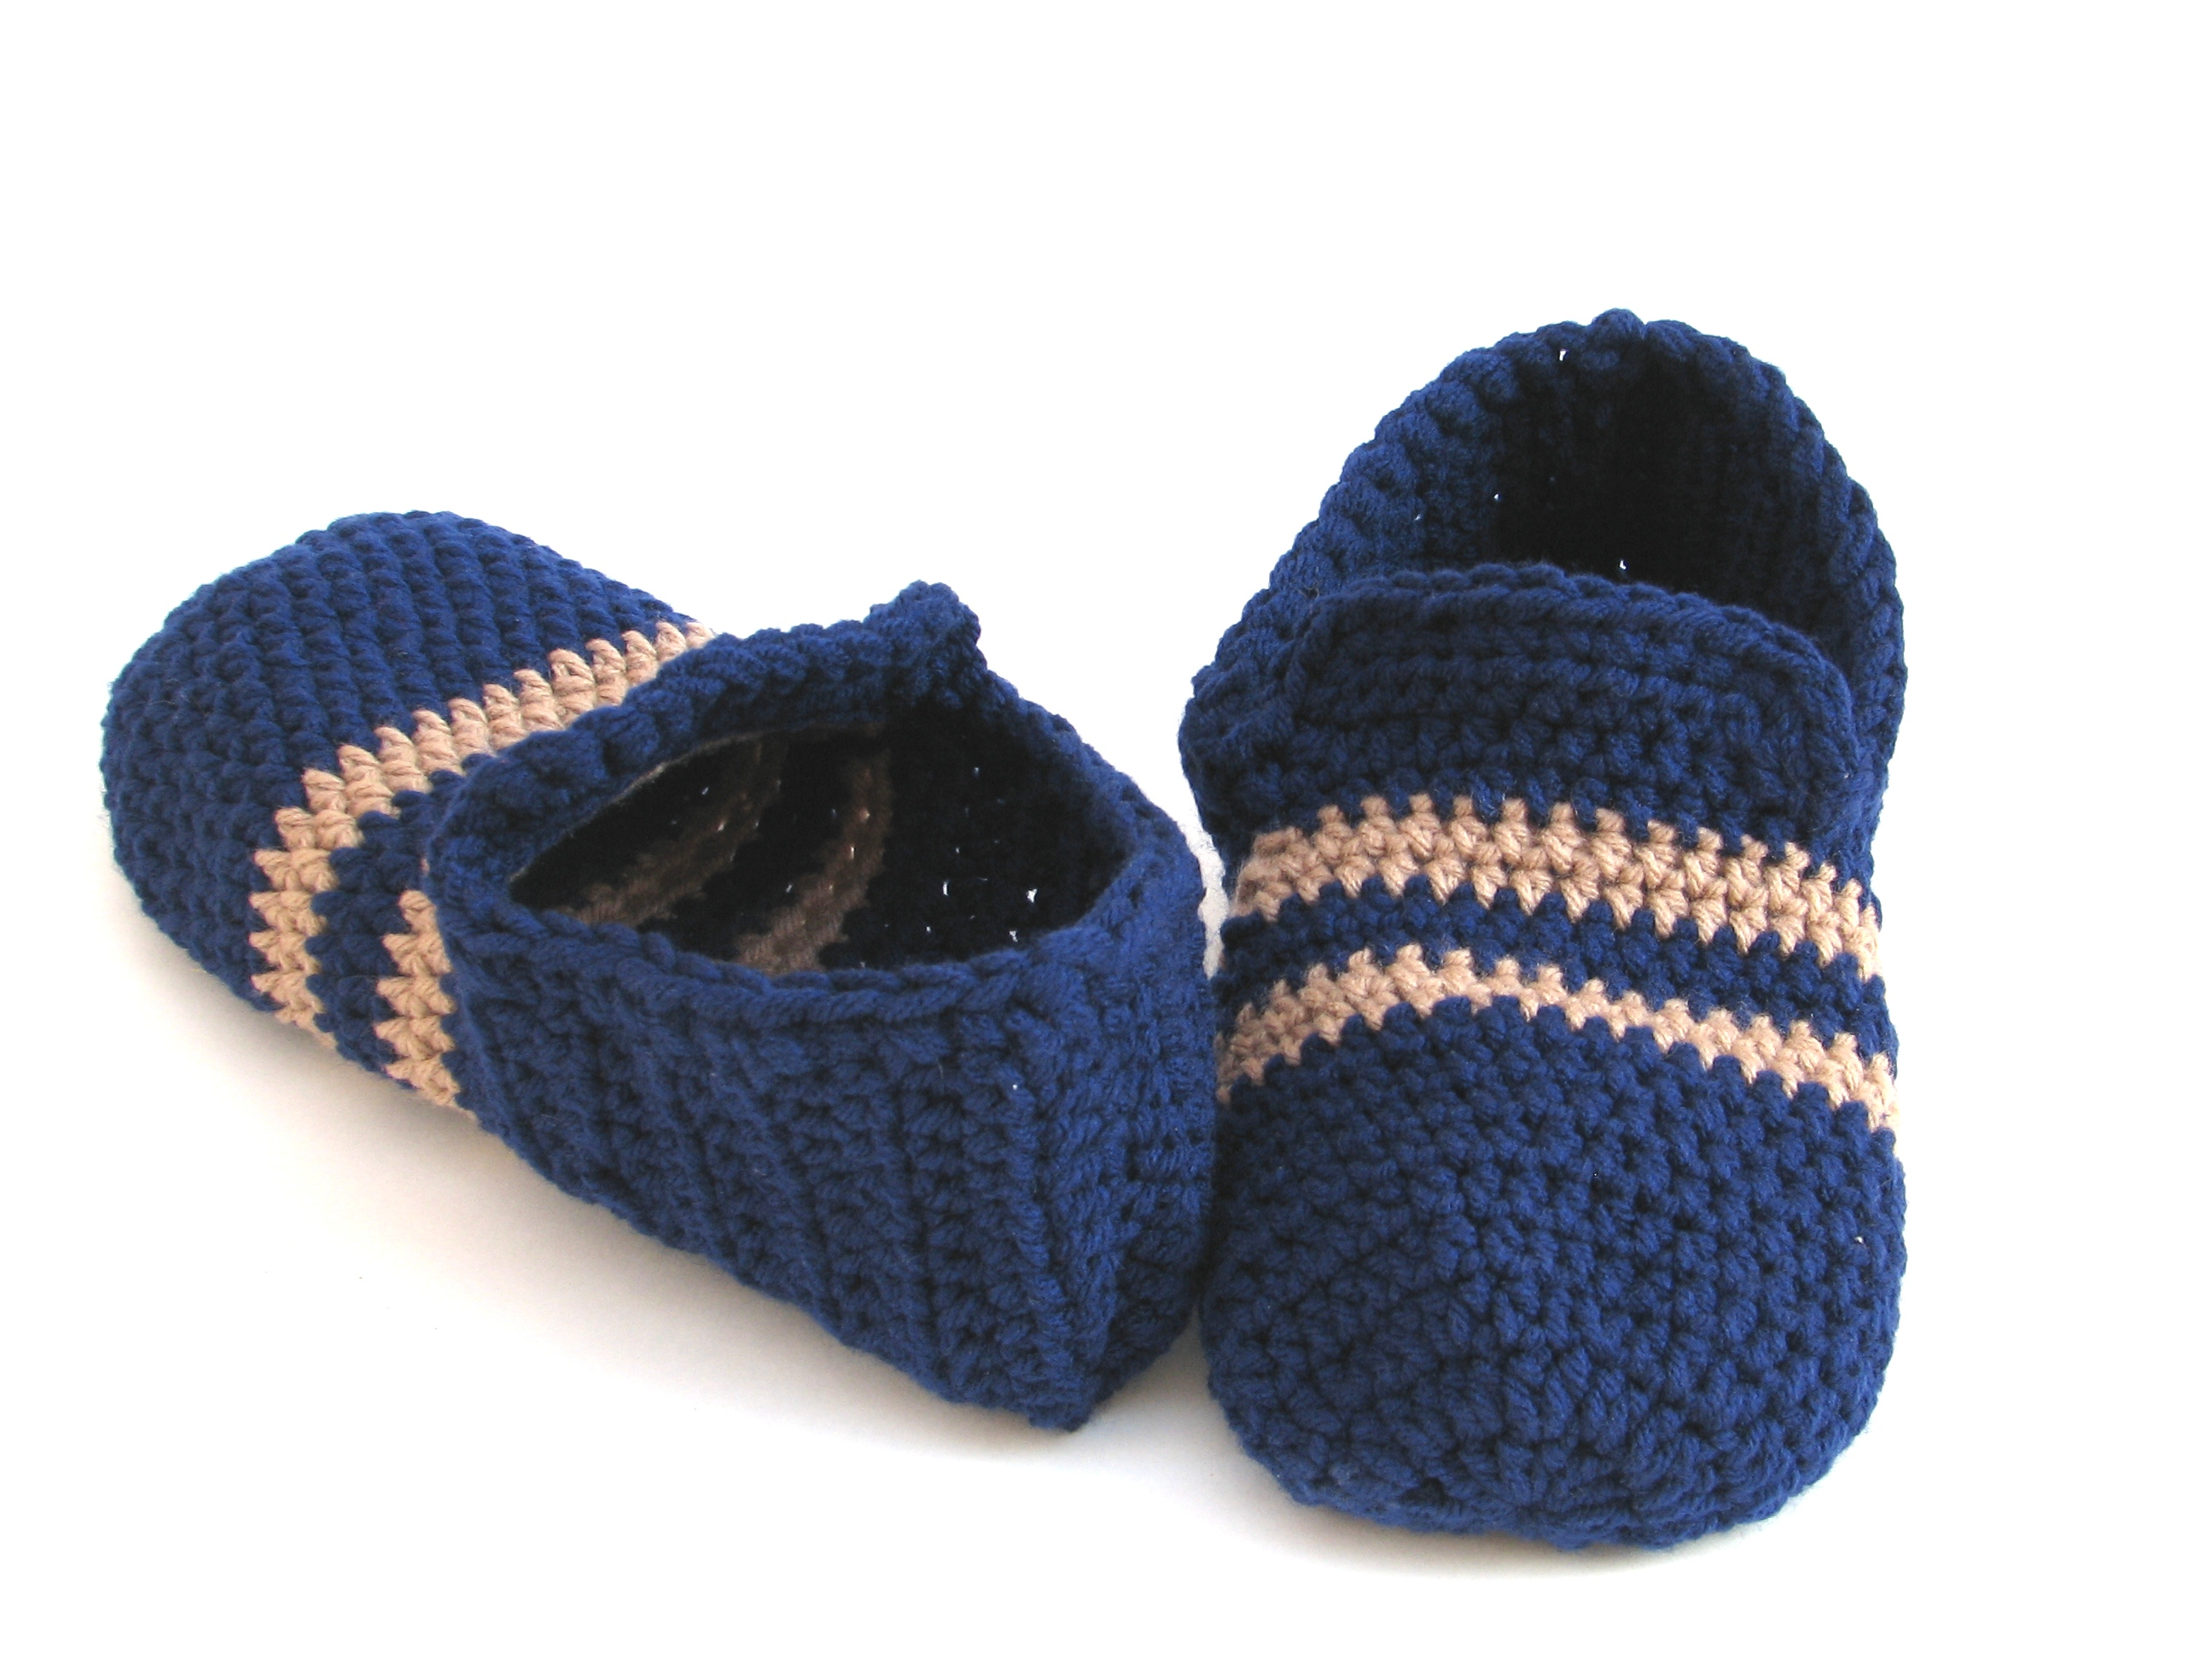 Crochet Slippers Pattern Free Mens Slippers Crochet Pattern Pdfeasy Great For Beginners Shoes